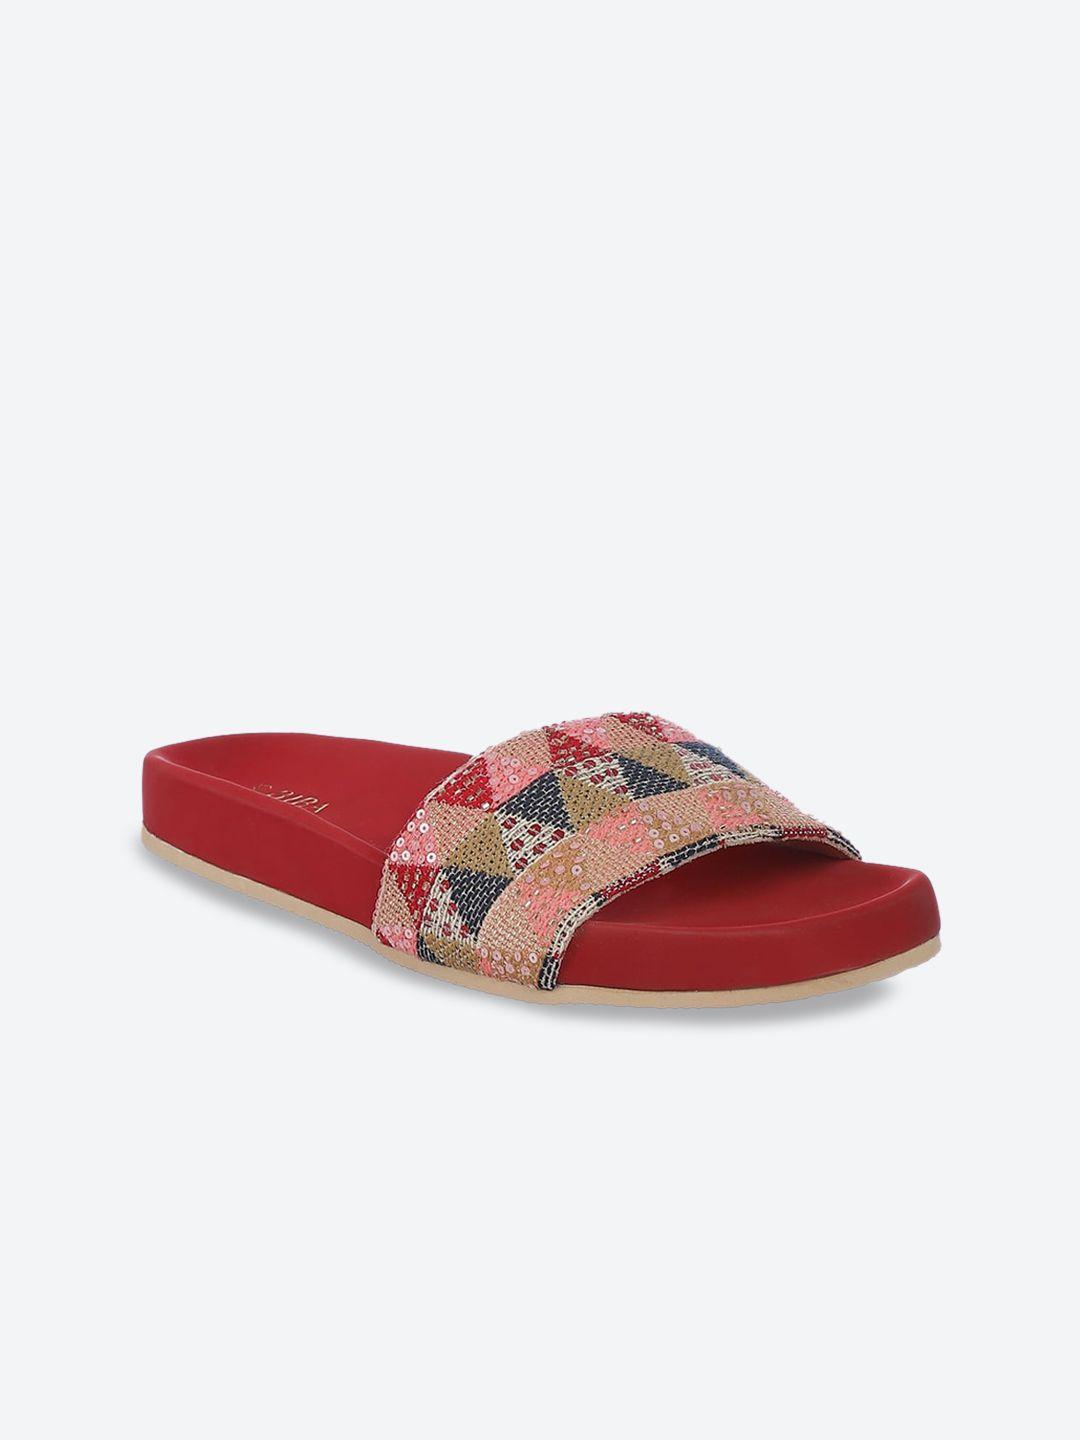 biba women multicoloured printed open toe flats